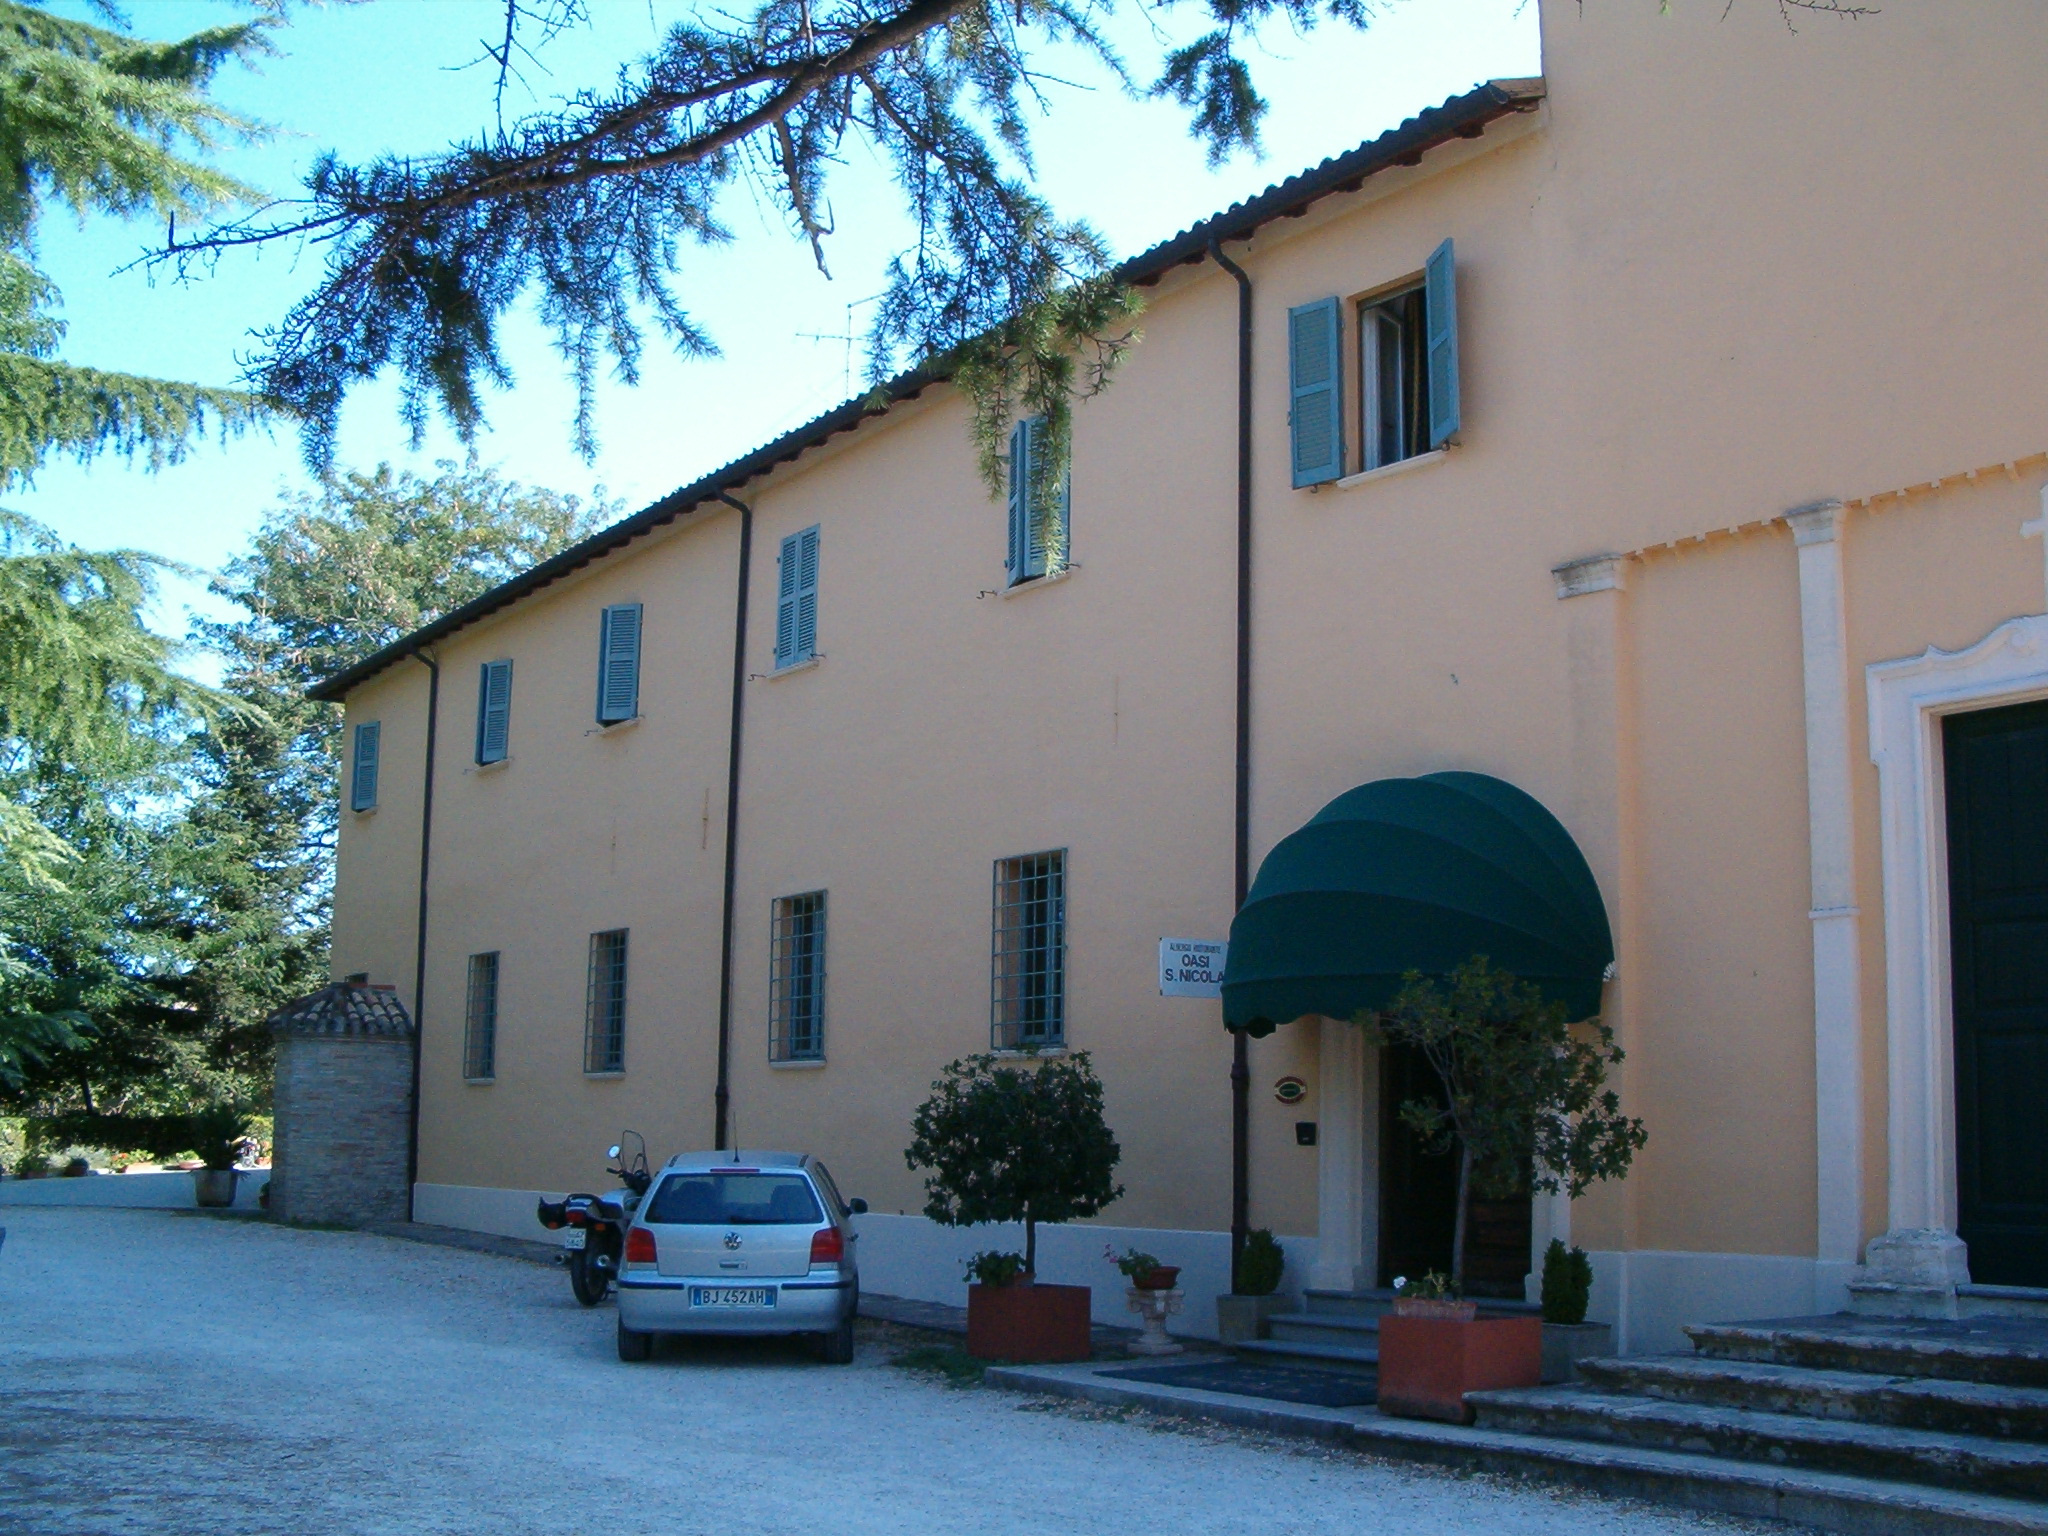 Convento di S. Nicola (convento, agostiniano) - Pesaro (PU) 